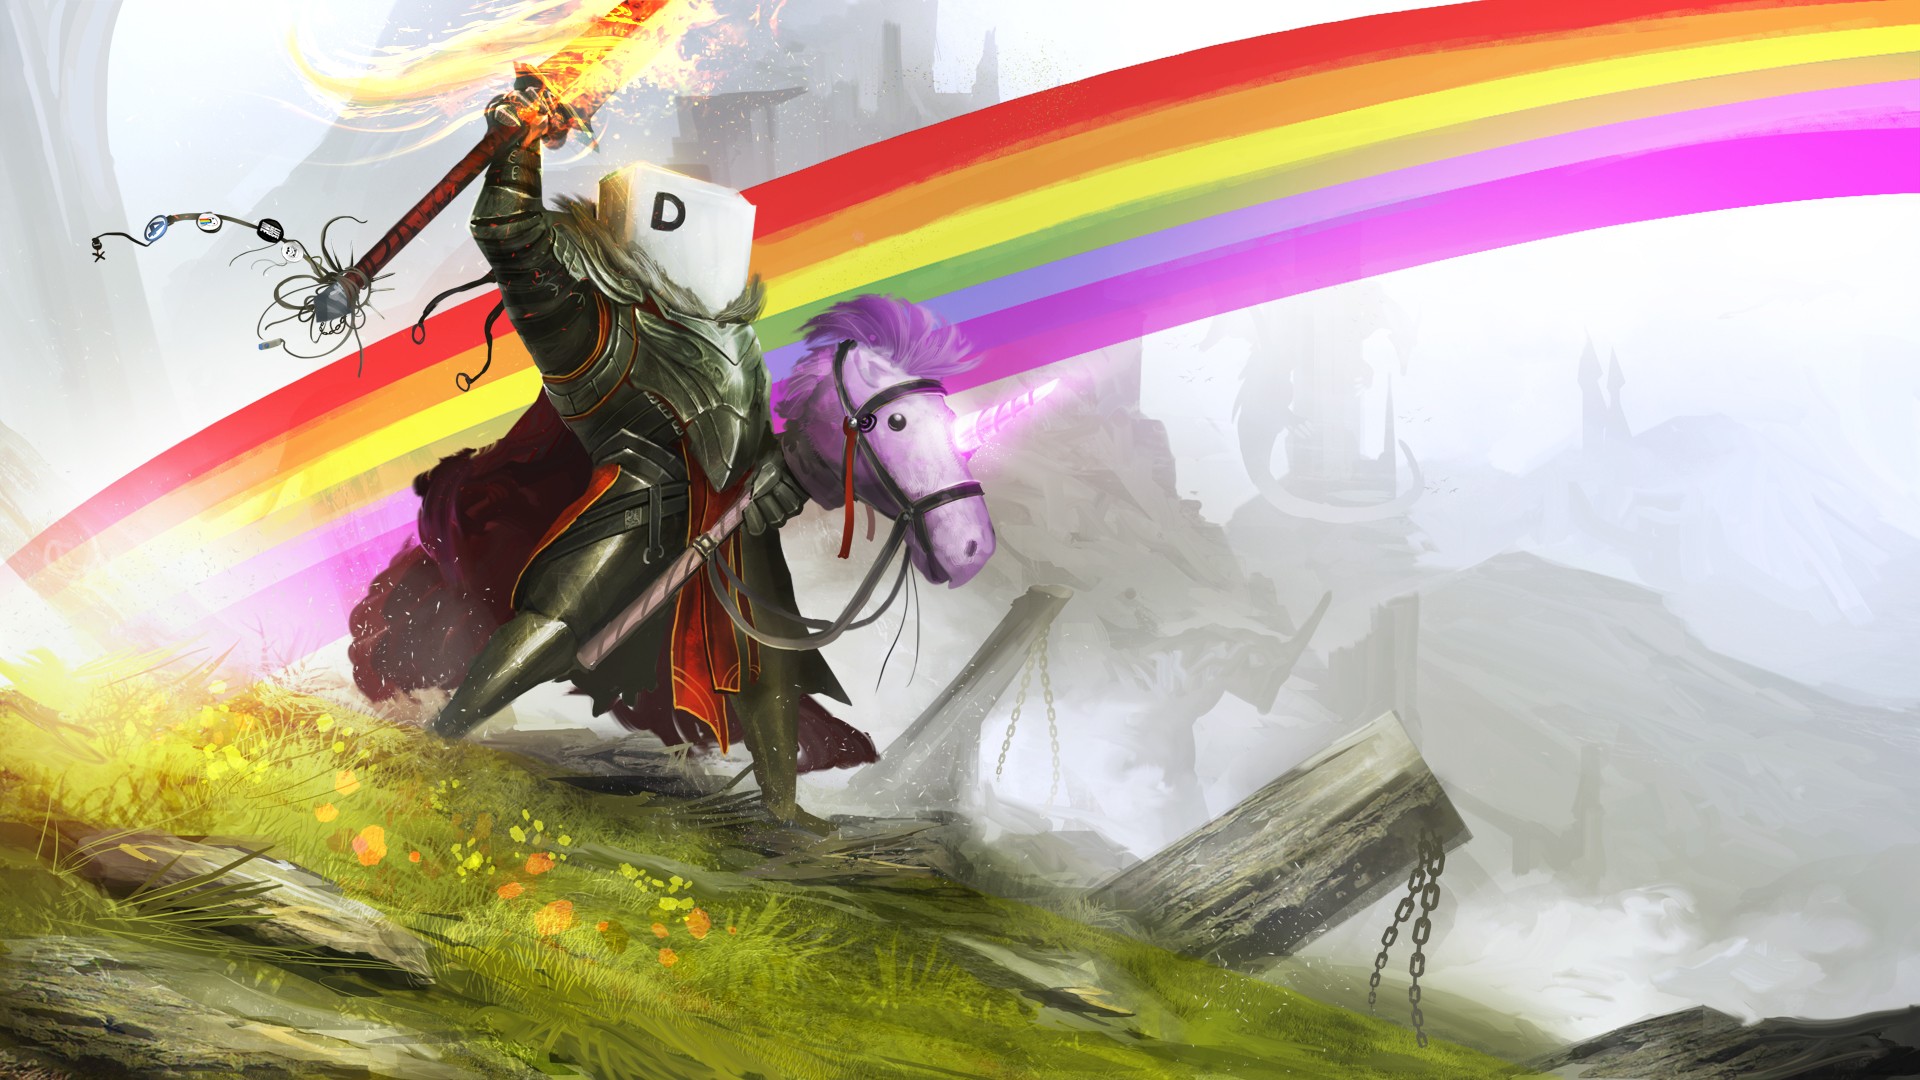 General 1920x1080 warrior sword Daniel Kamarudin DeviantArt humor fantasy armor rainbows fire weapon armor unicorn digital art